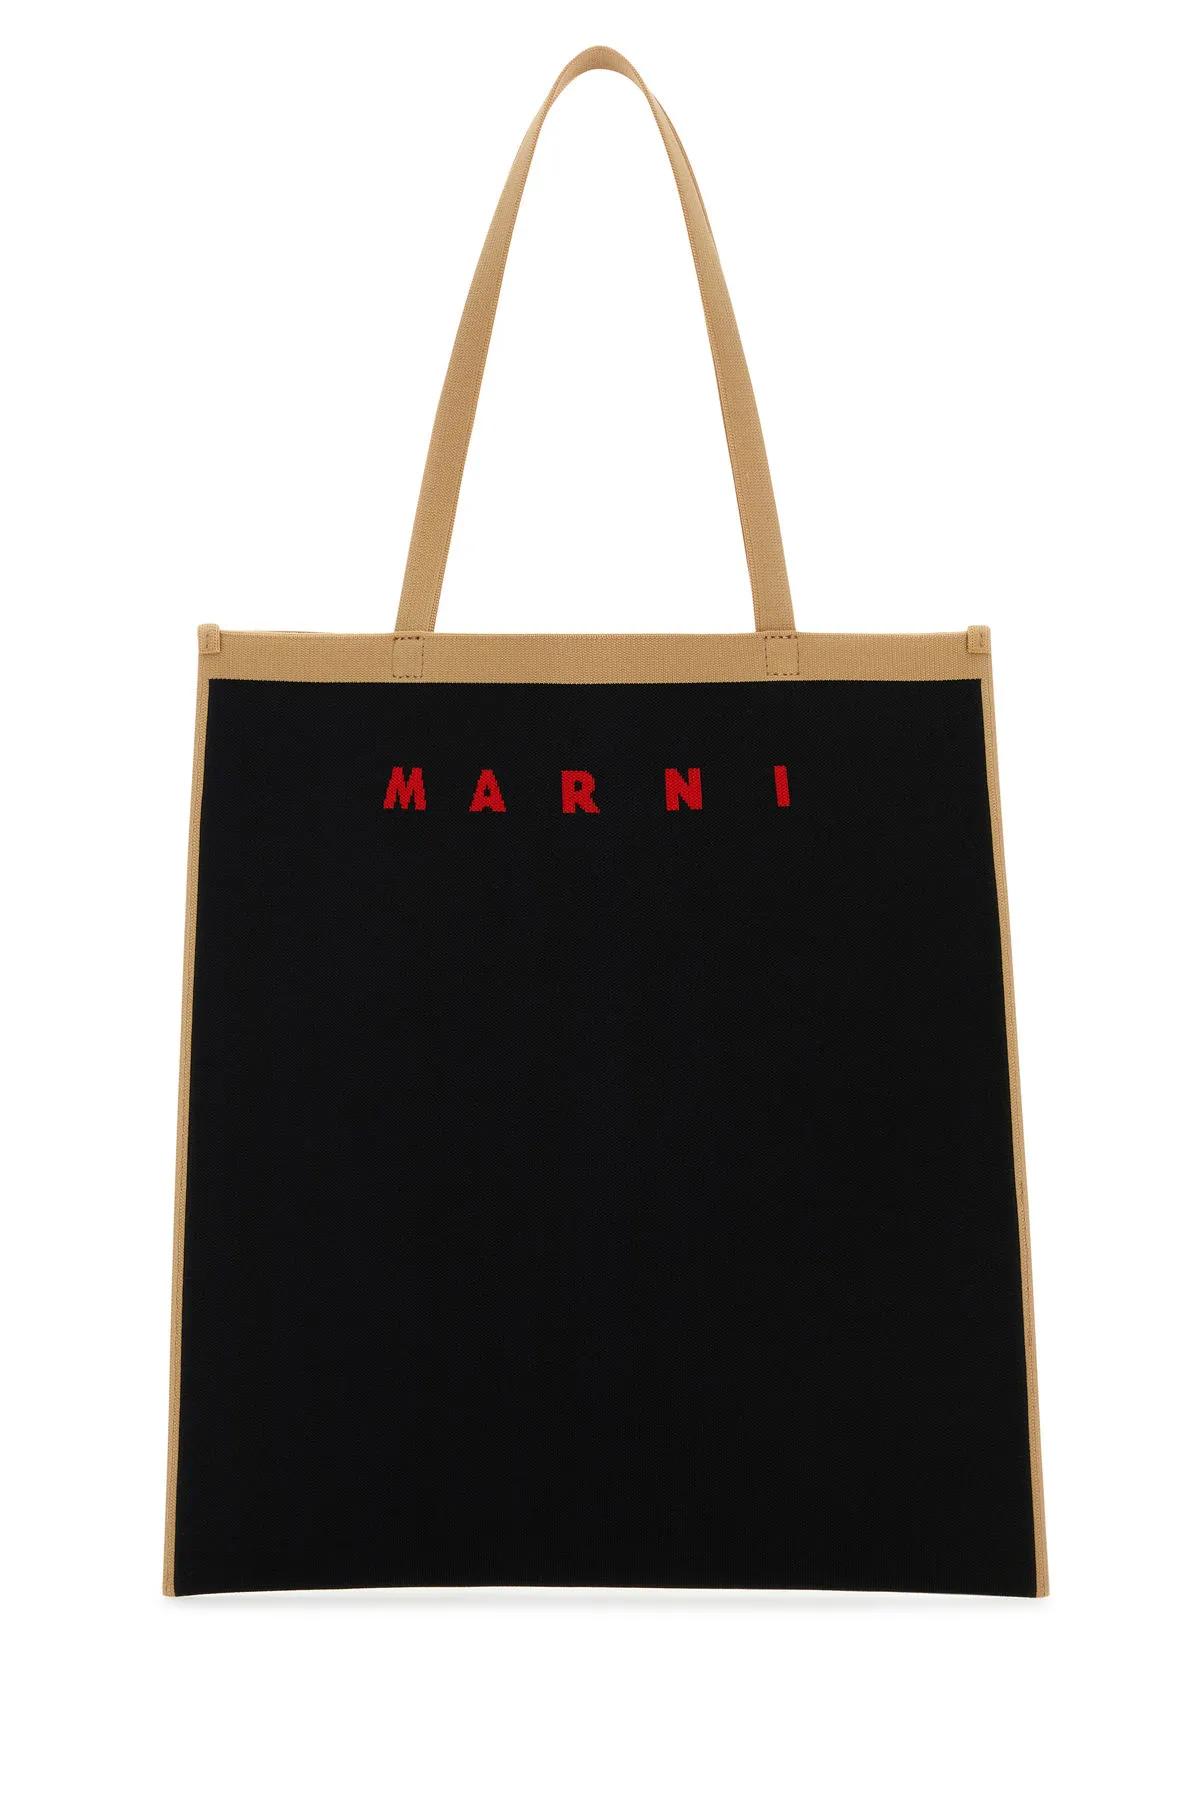 Marni Black Canvas Shopping Bag